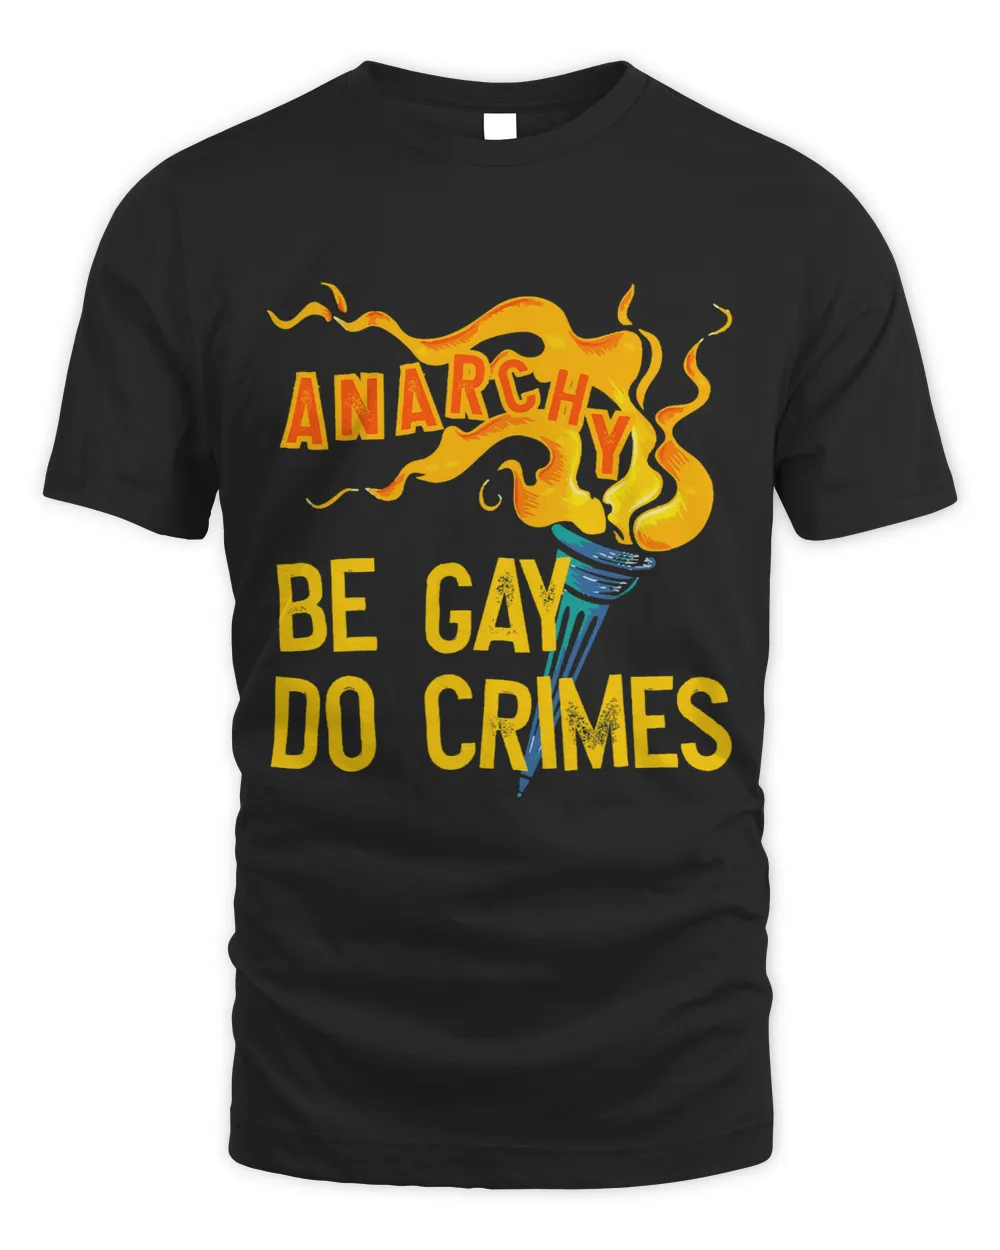 LGBT Pride Be Gay Do Crime LGBT Equality LGBTQ Gay Trans Rights Anarchy